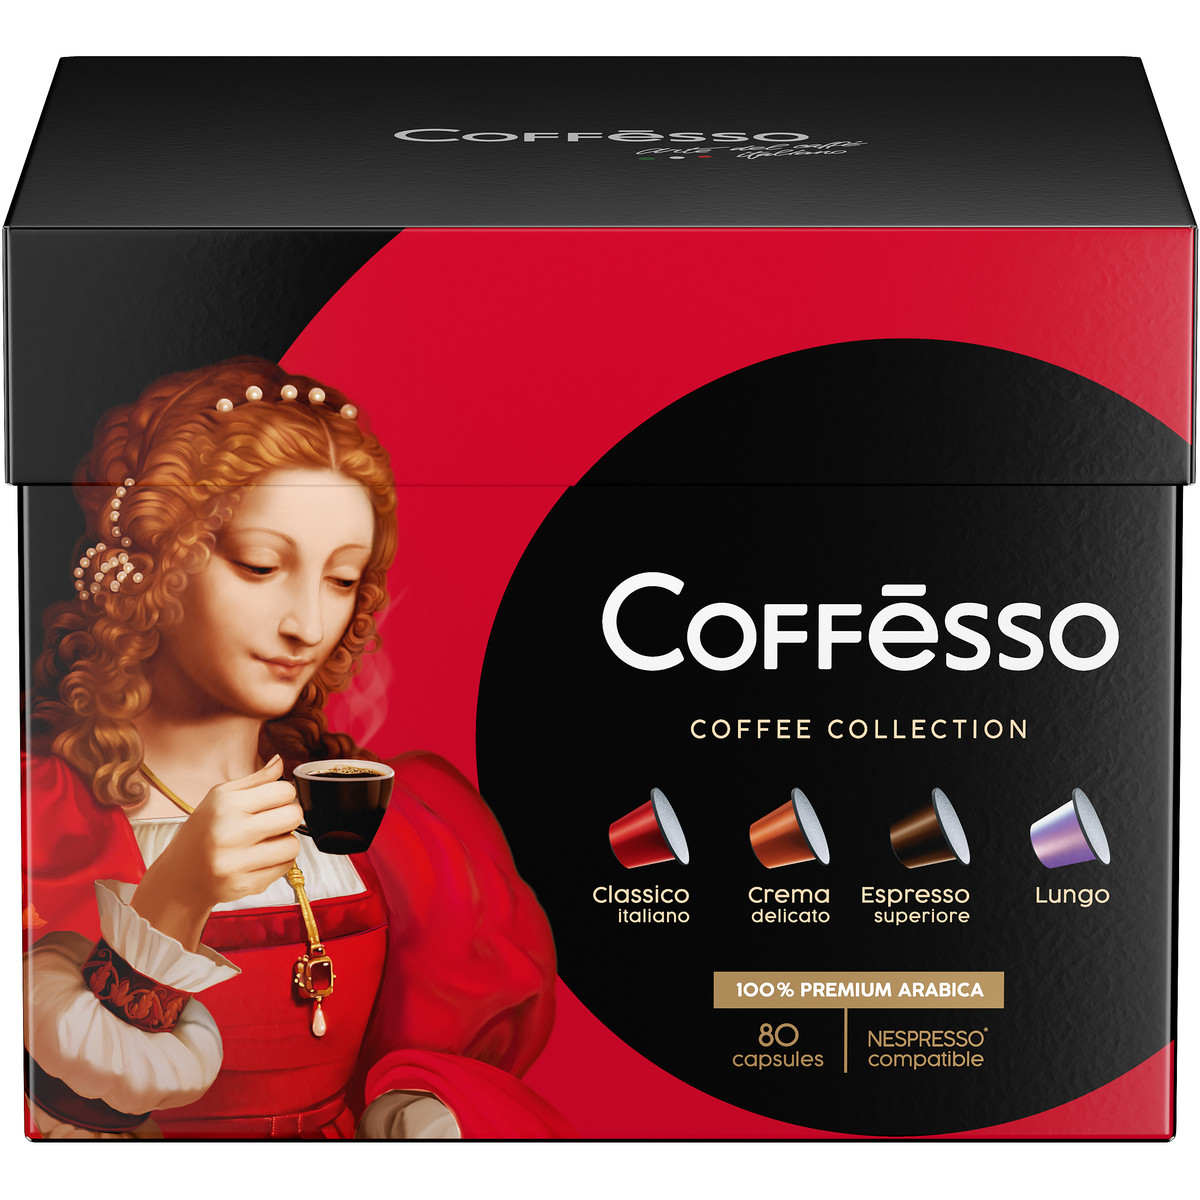 Кофе Coffesso Ассорти Арома, 80 капсул, 4 вкуса - купить в IdeaMark, цена на Мегамаркет